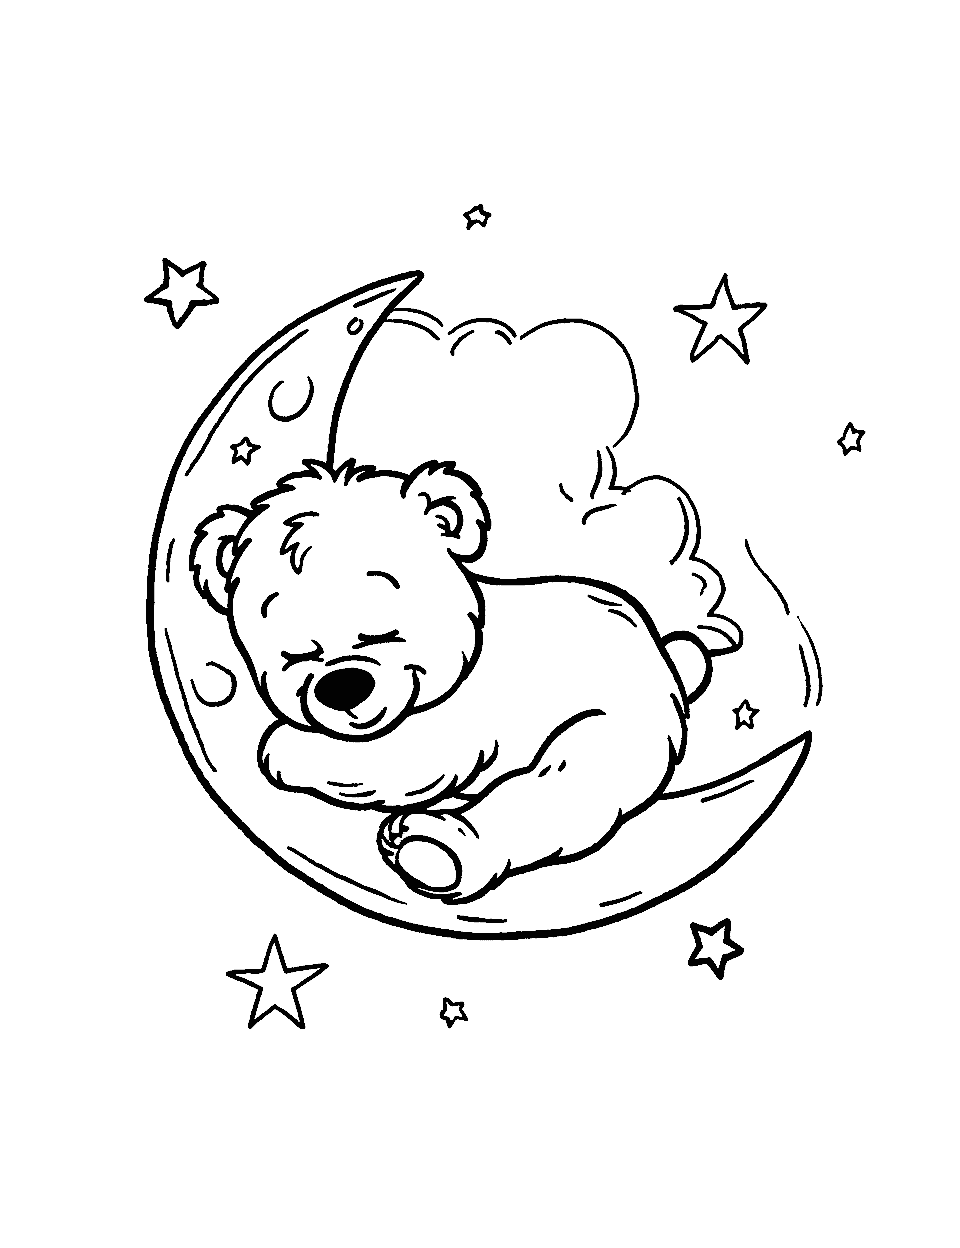 Sleepy Teddy Bear Under the Stars Coloring Page - A teddy bear sleeping on a moon with stars around.